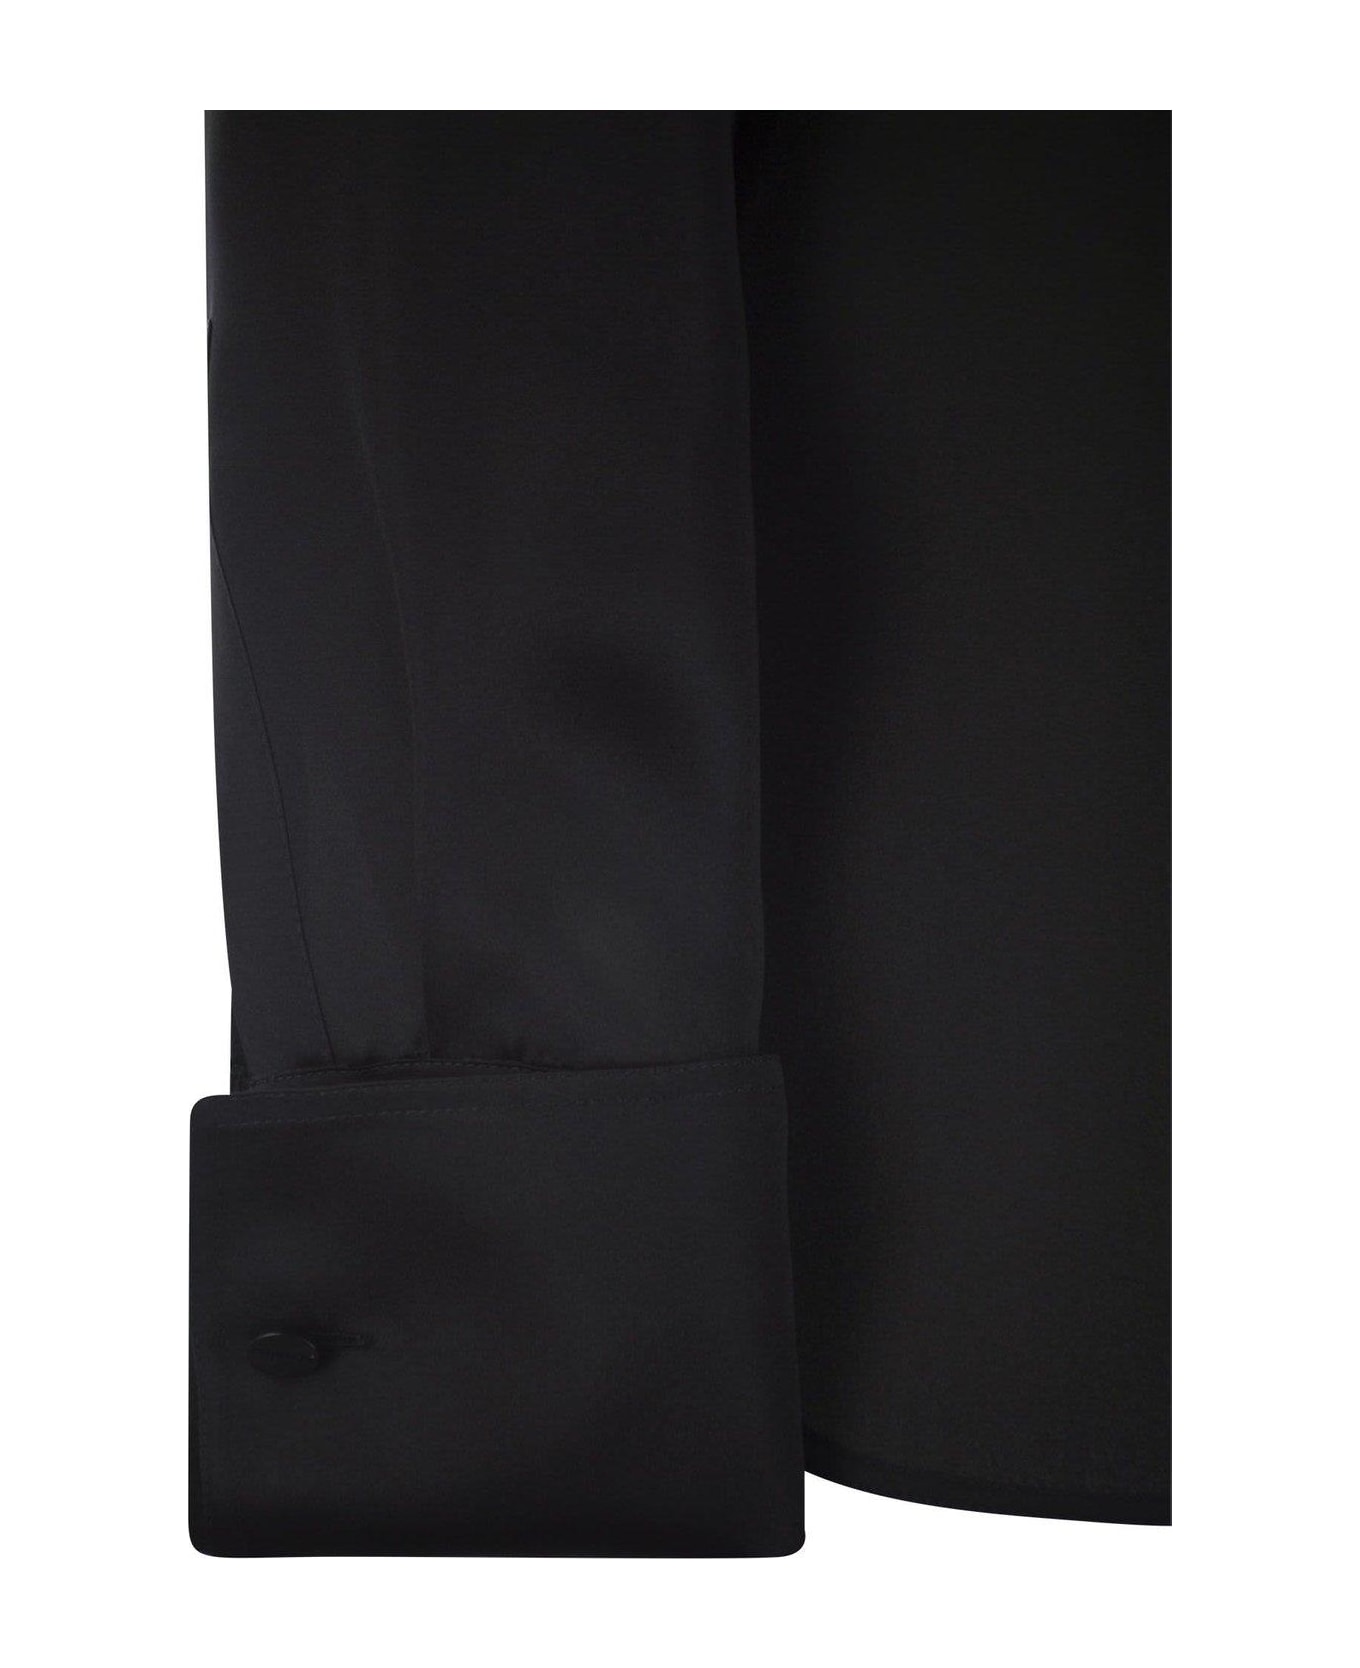 Max Mara Buttoned Long-sleeved Shirt - Black シャツ